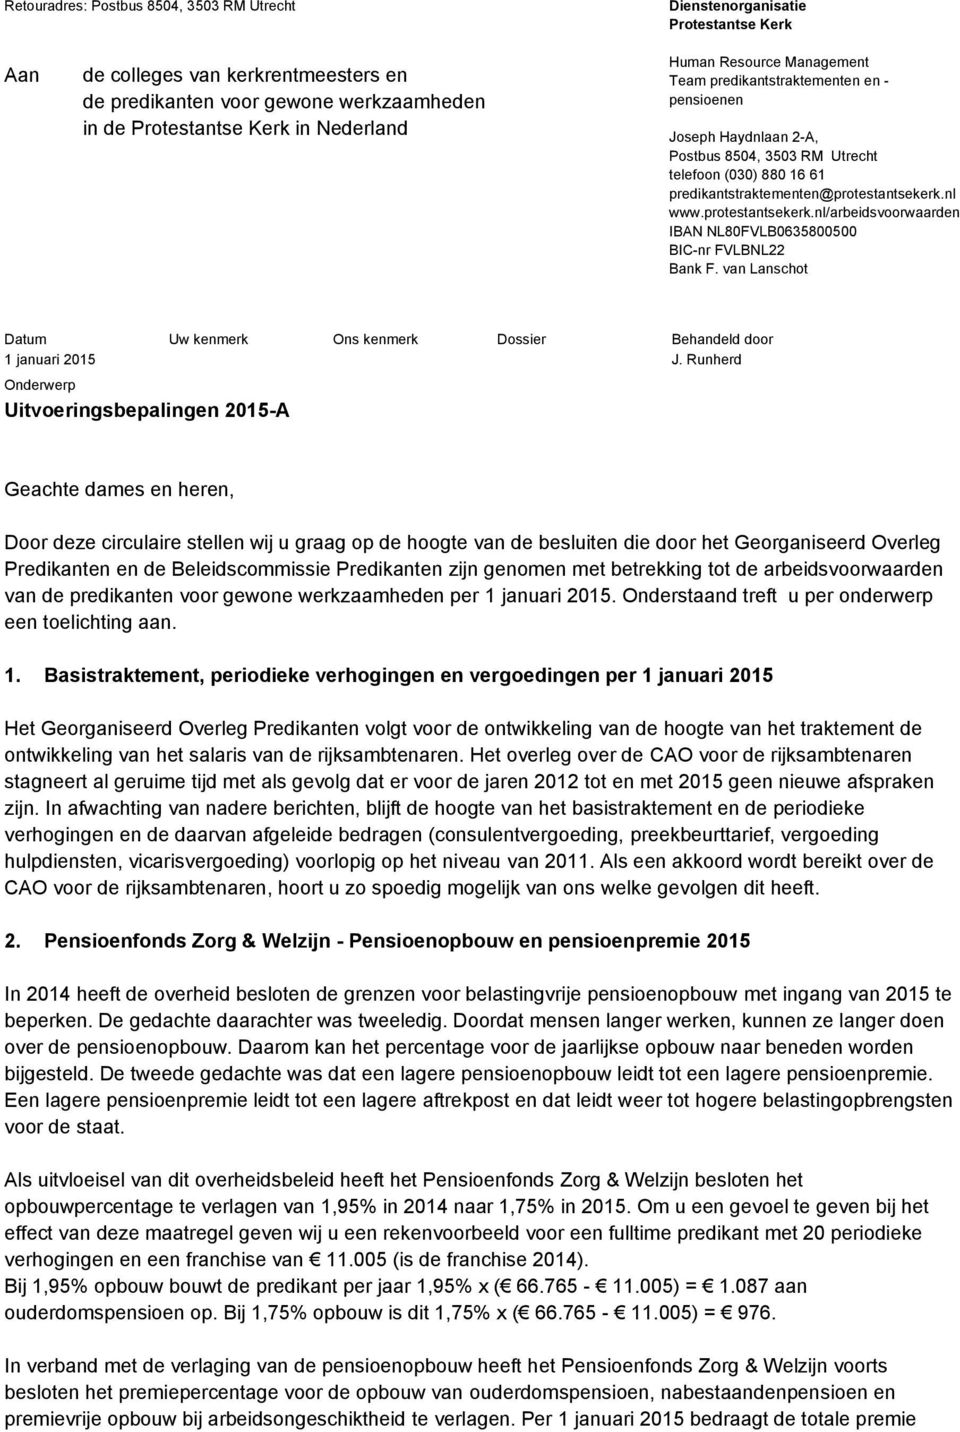 protestantsekerk.nl/arbeidsvoorwaarden IBAN NL80FVLB0635800500 BIC-nr FVLBNL22 Bank F. van Lanschot Datum Onderwerp Uitvoeringsbepalingen 2015-A Uw kenmerk Ons kenmerk Dossier Behandeld door J.